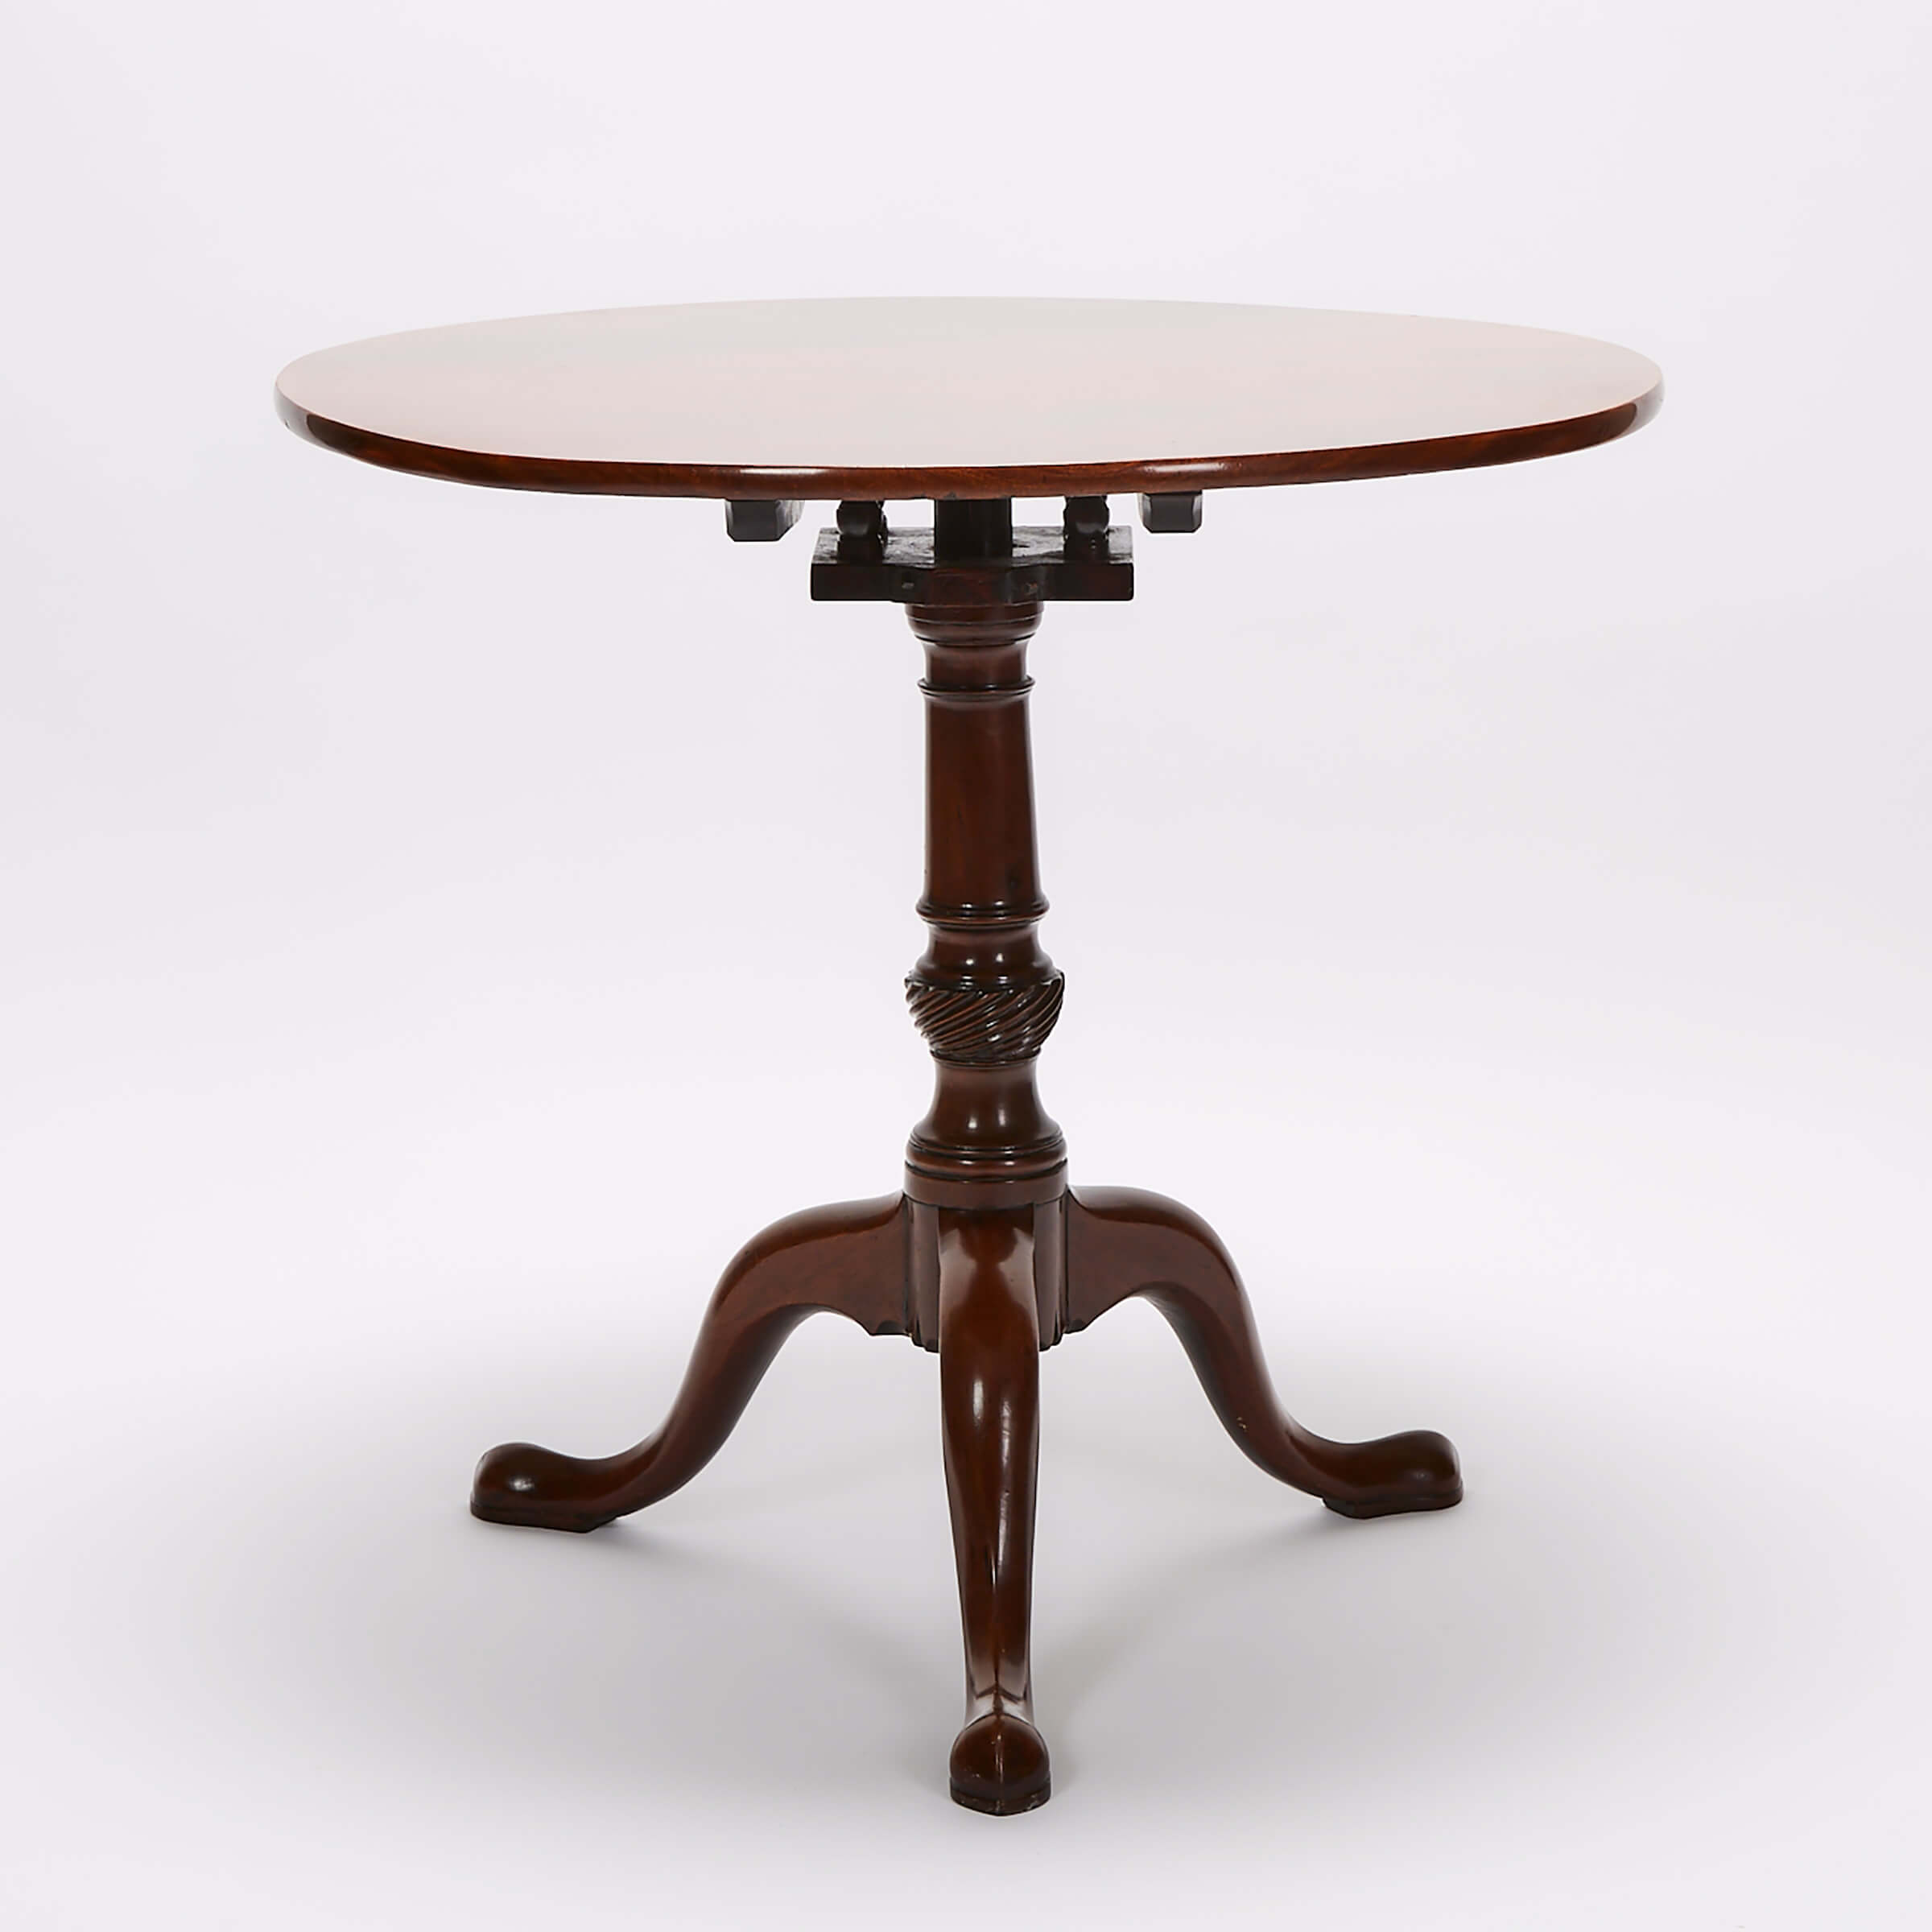 George III Mahogany Birdcage Tilt Top Tea Table, late 18th century